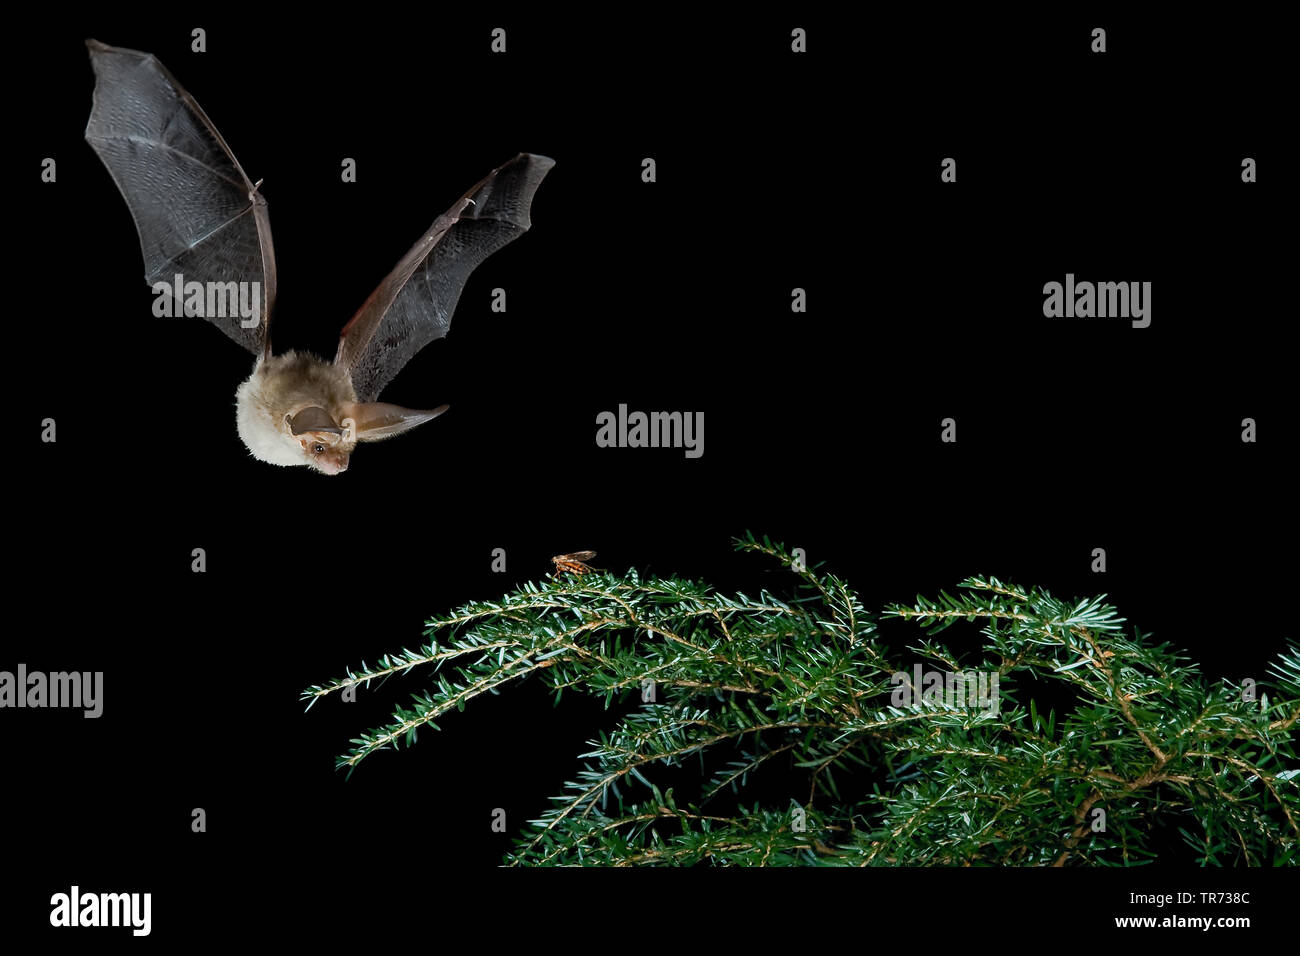 Bechstein bat (Myotis bechsteinii), volare di notte, mirando a un insetto, Belgio Foto Stock